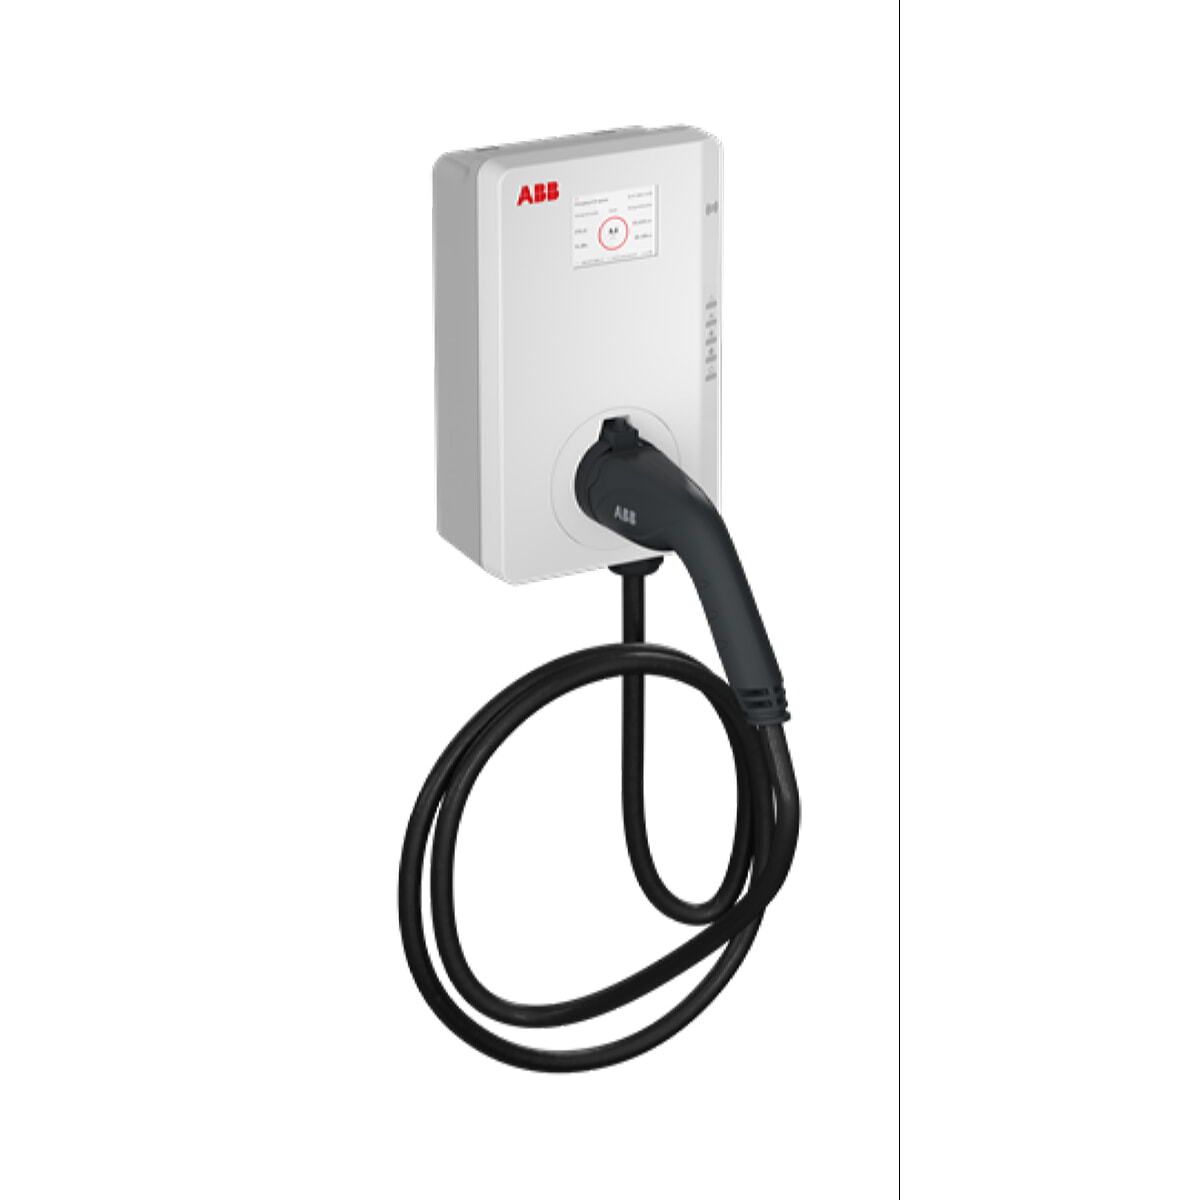 ABB Stotz-Kontakt wall charging station Terra AC W11-G5-RD-PC-0 with RFID display